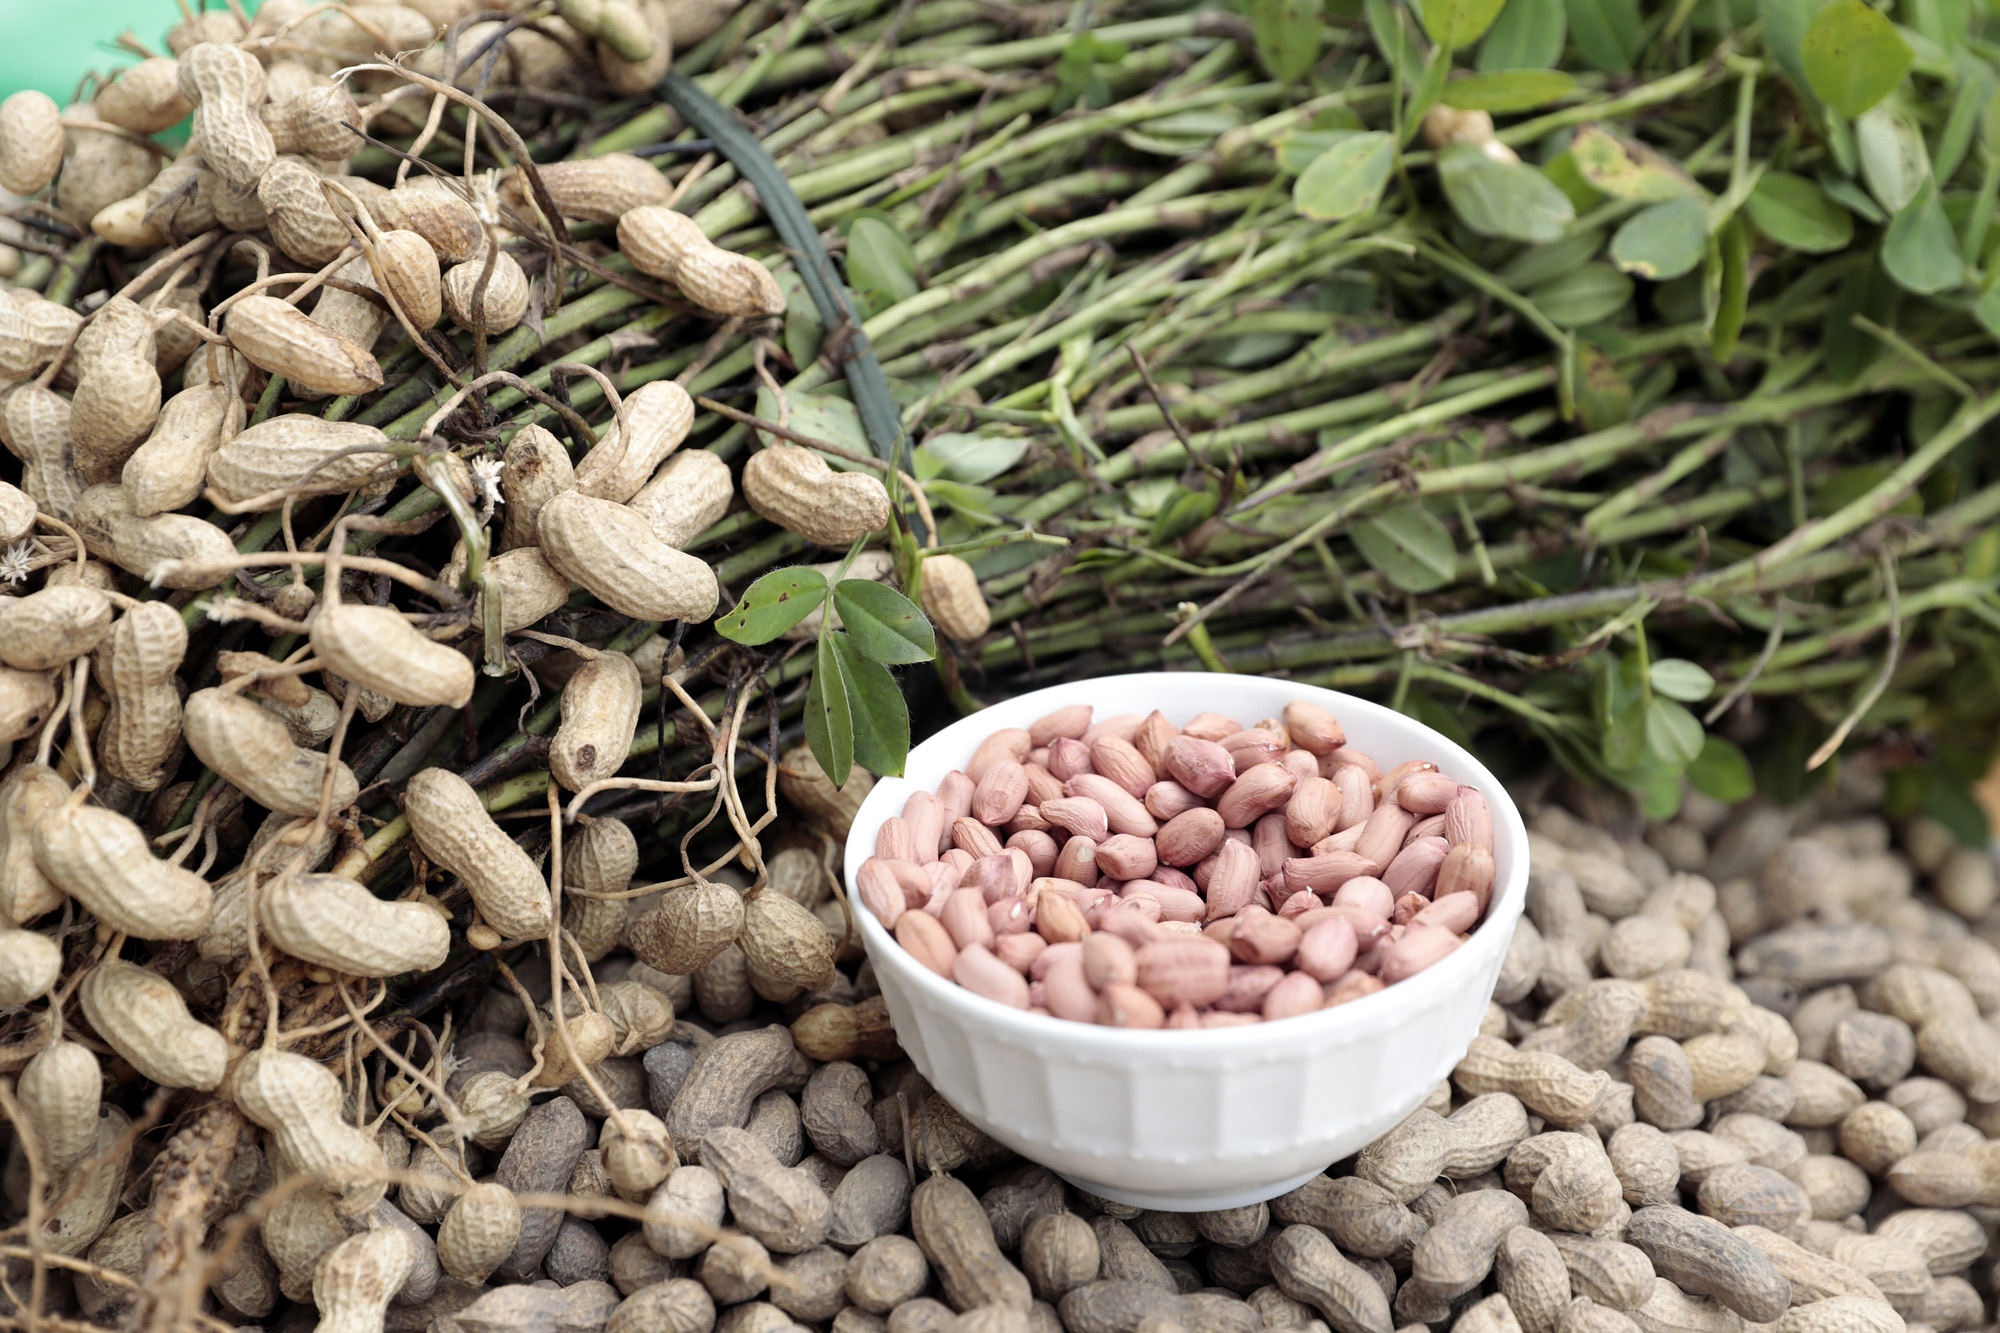 Freshly harvested peanuts in Uganda